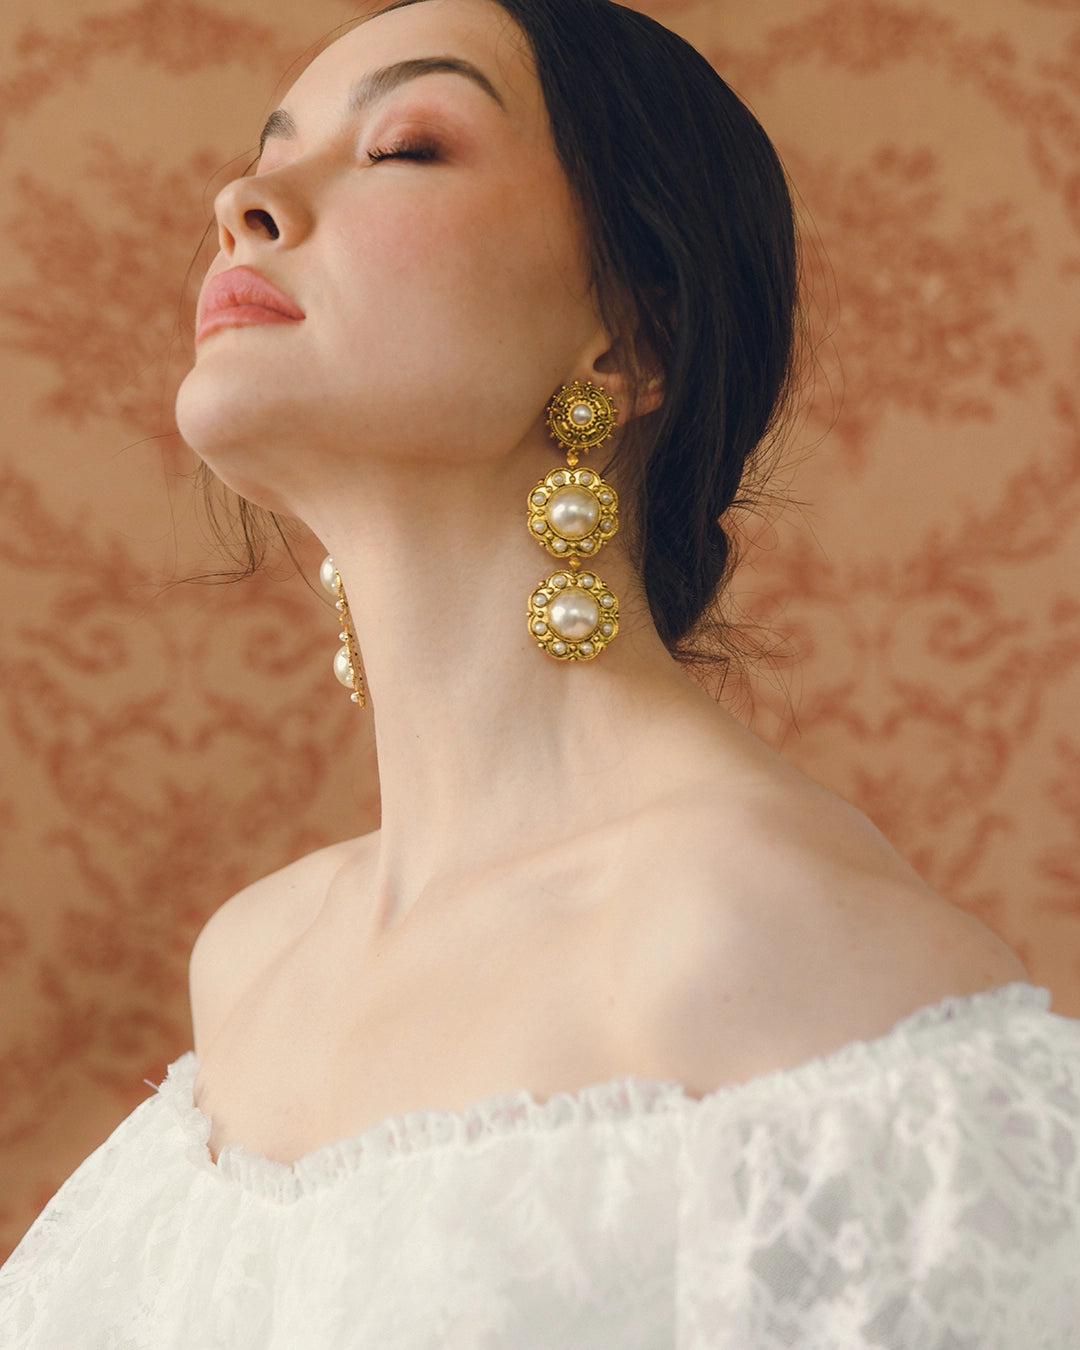 Vintage Baroque Revival Double-Drop Pearl Earrings